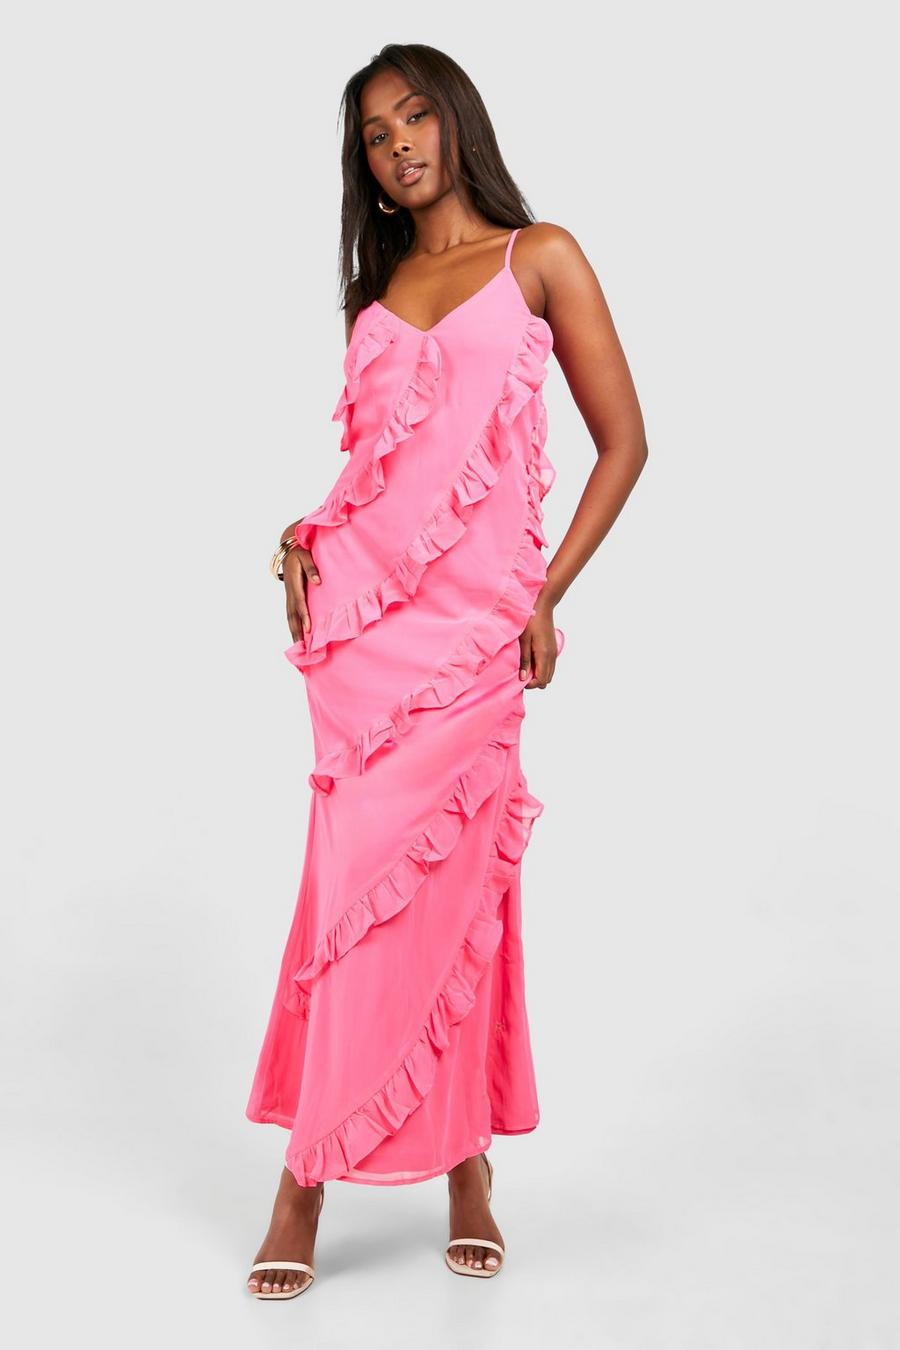 Hot Pink Slip Dress, Silk Maxi Dress, Tied Back Slip Dress, Pink